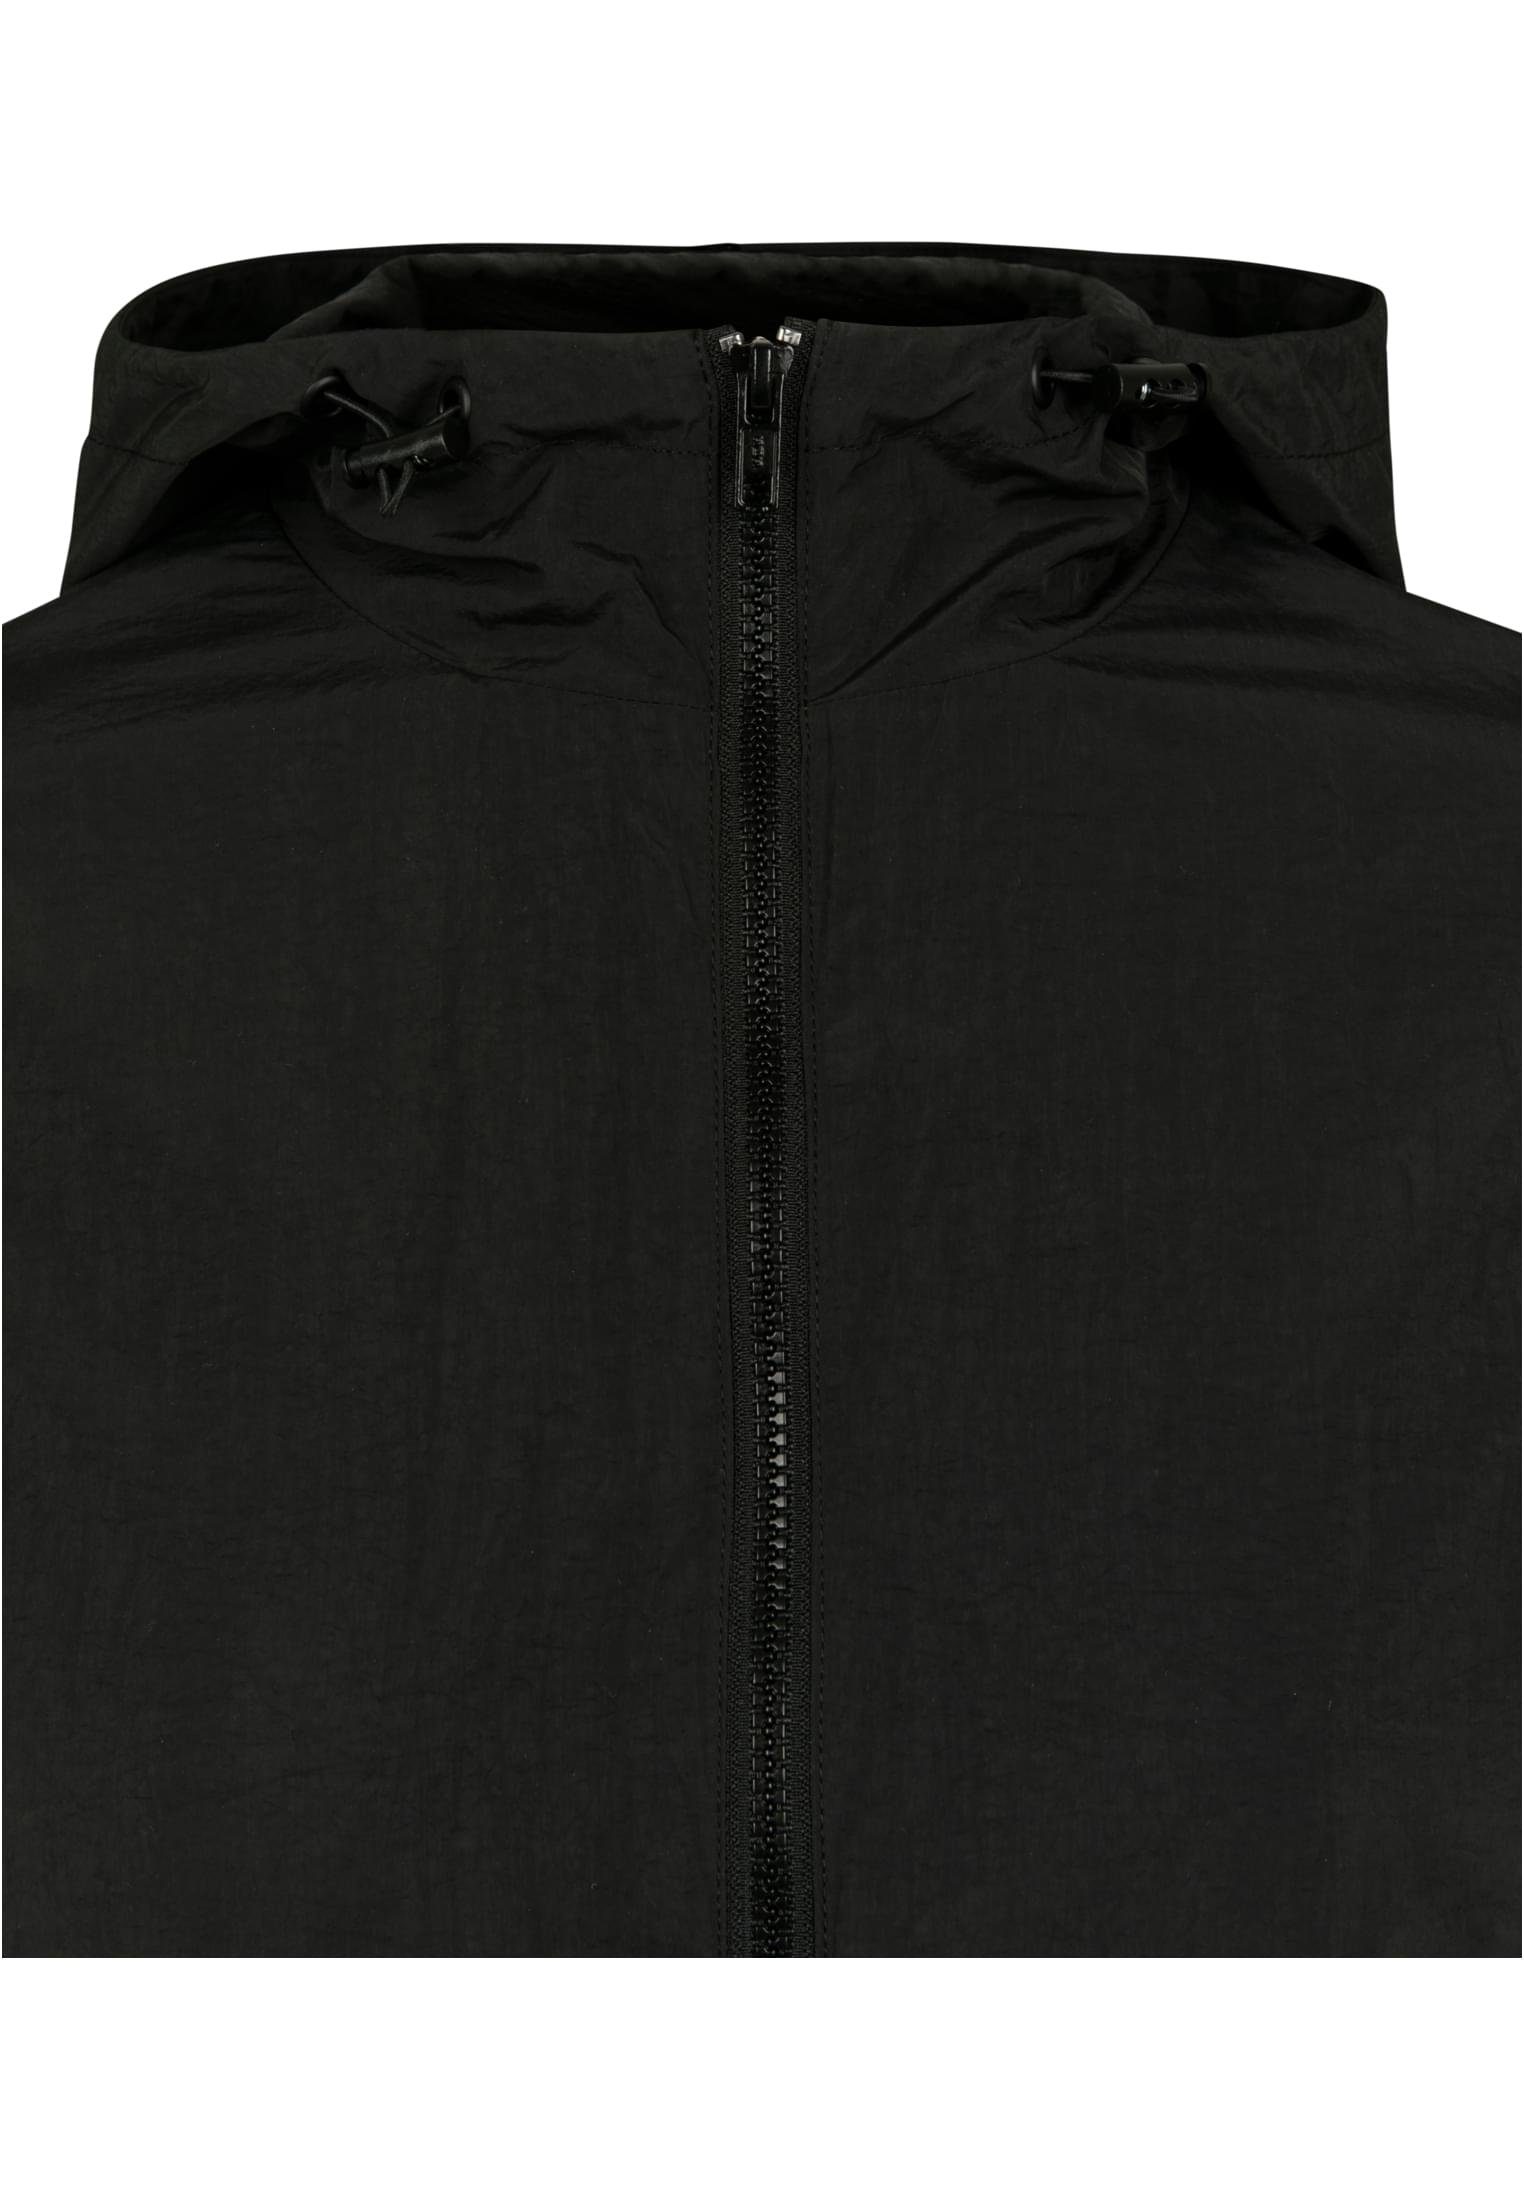 Jacket Damen (1-St) CLASSICS Batwing URBAN Ladies black/white Outdoorjacke Crinkle